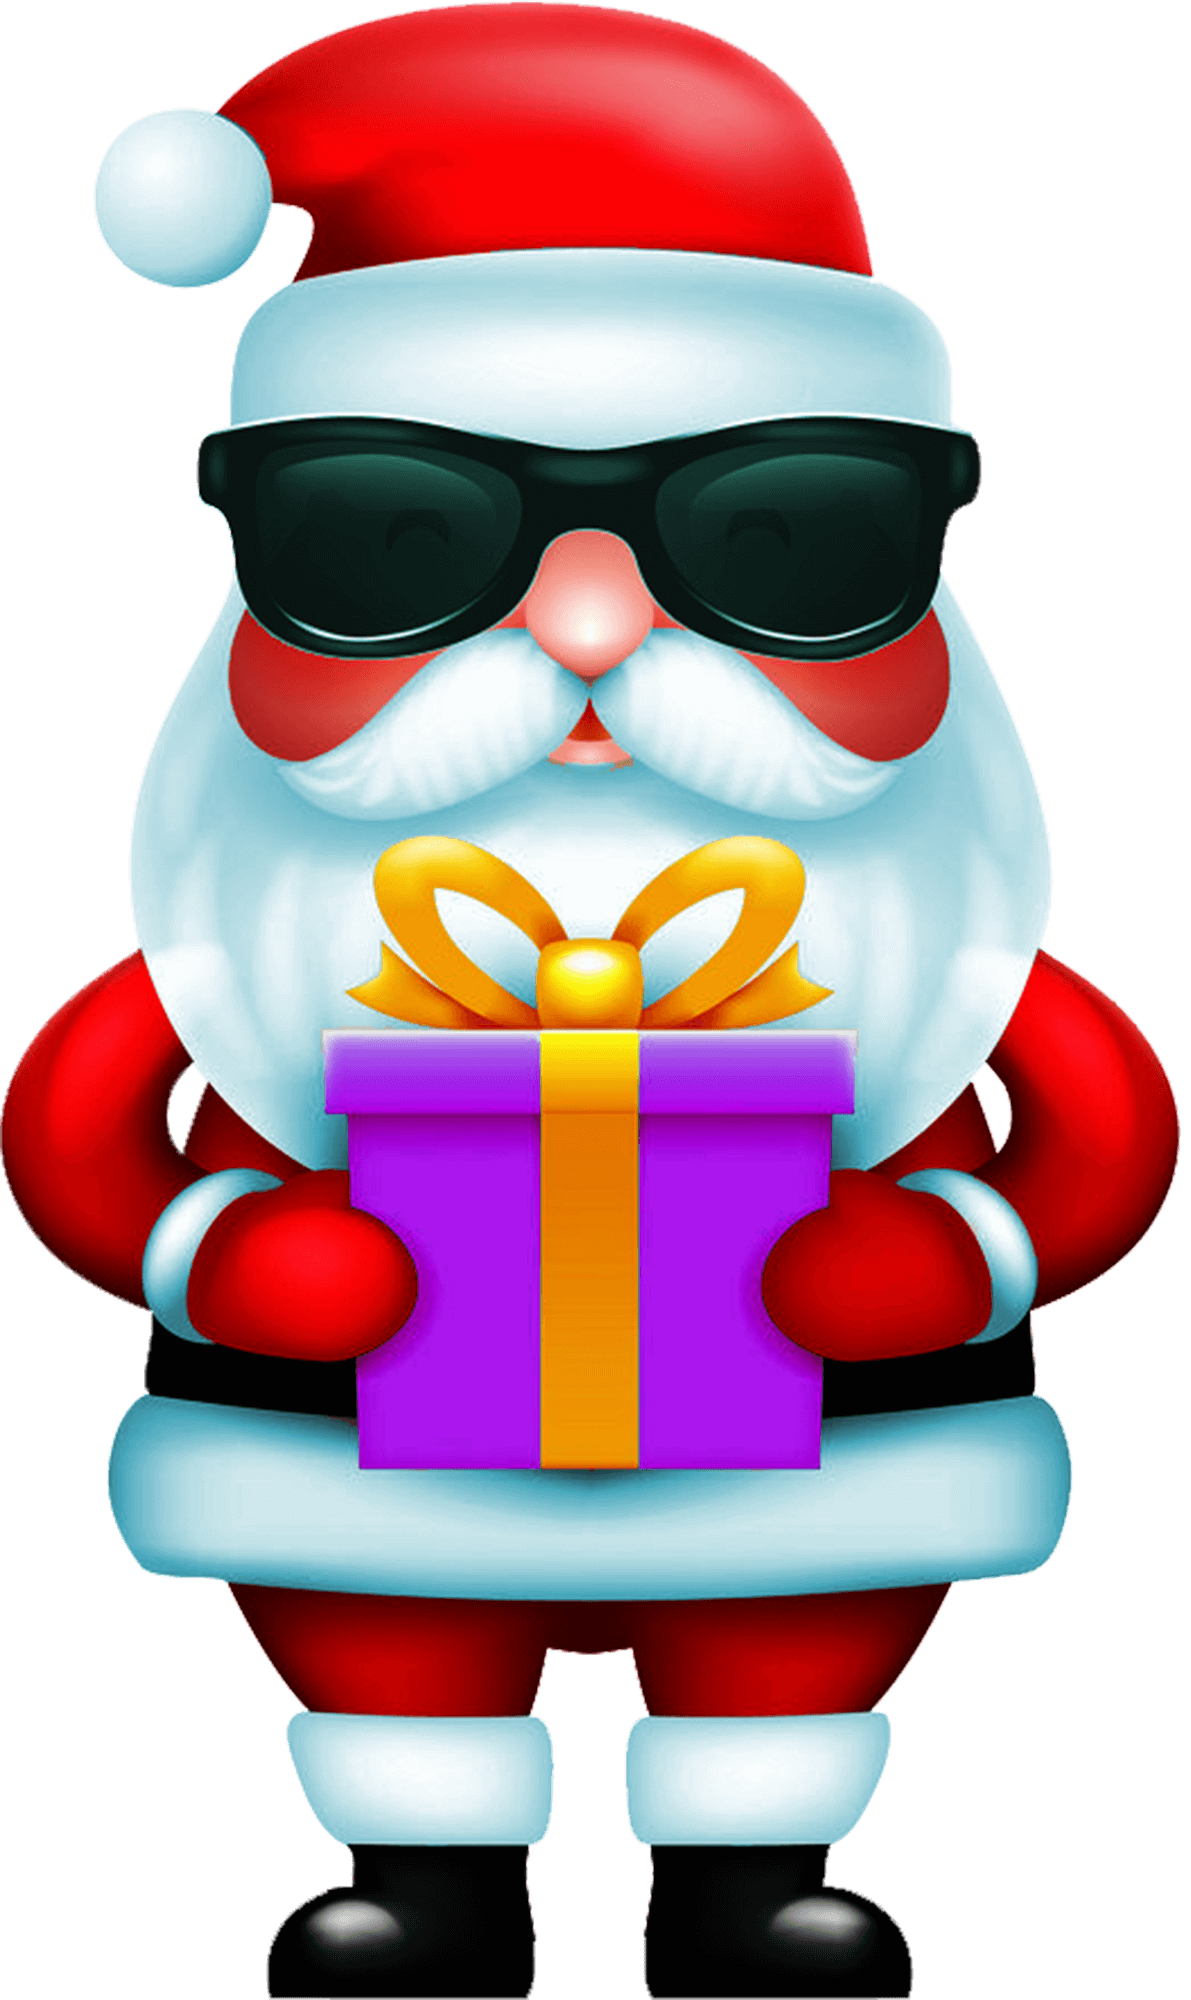 Secret santa claus gift box in hand vector image png - Pngfreepic